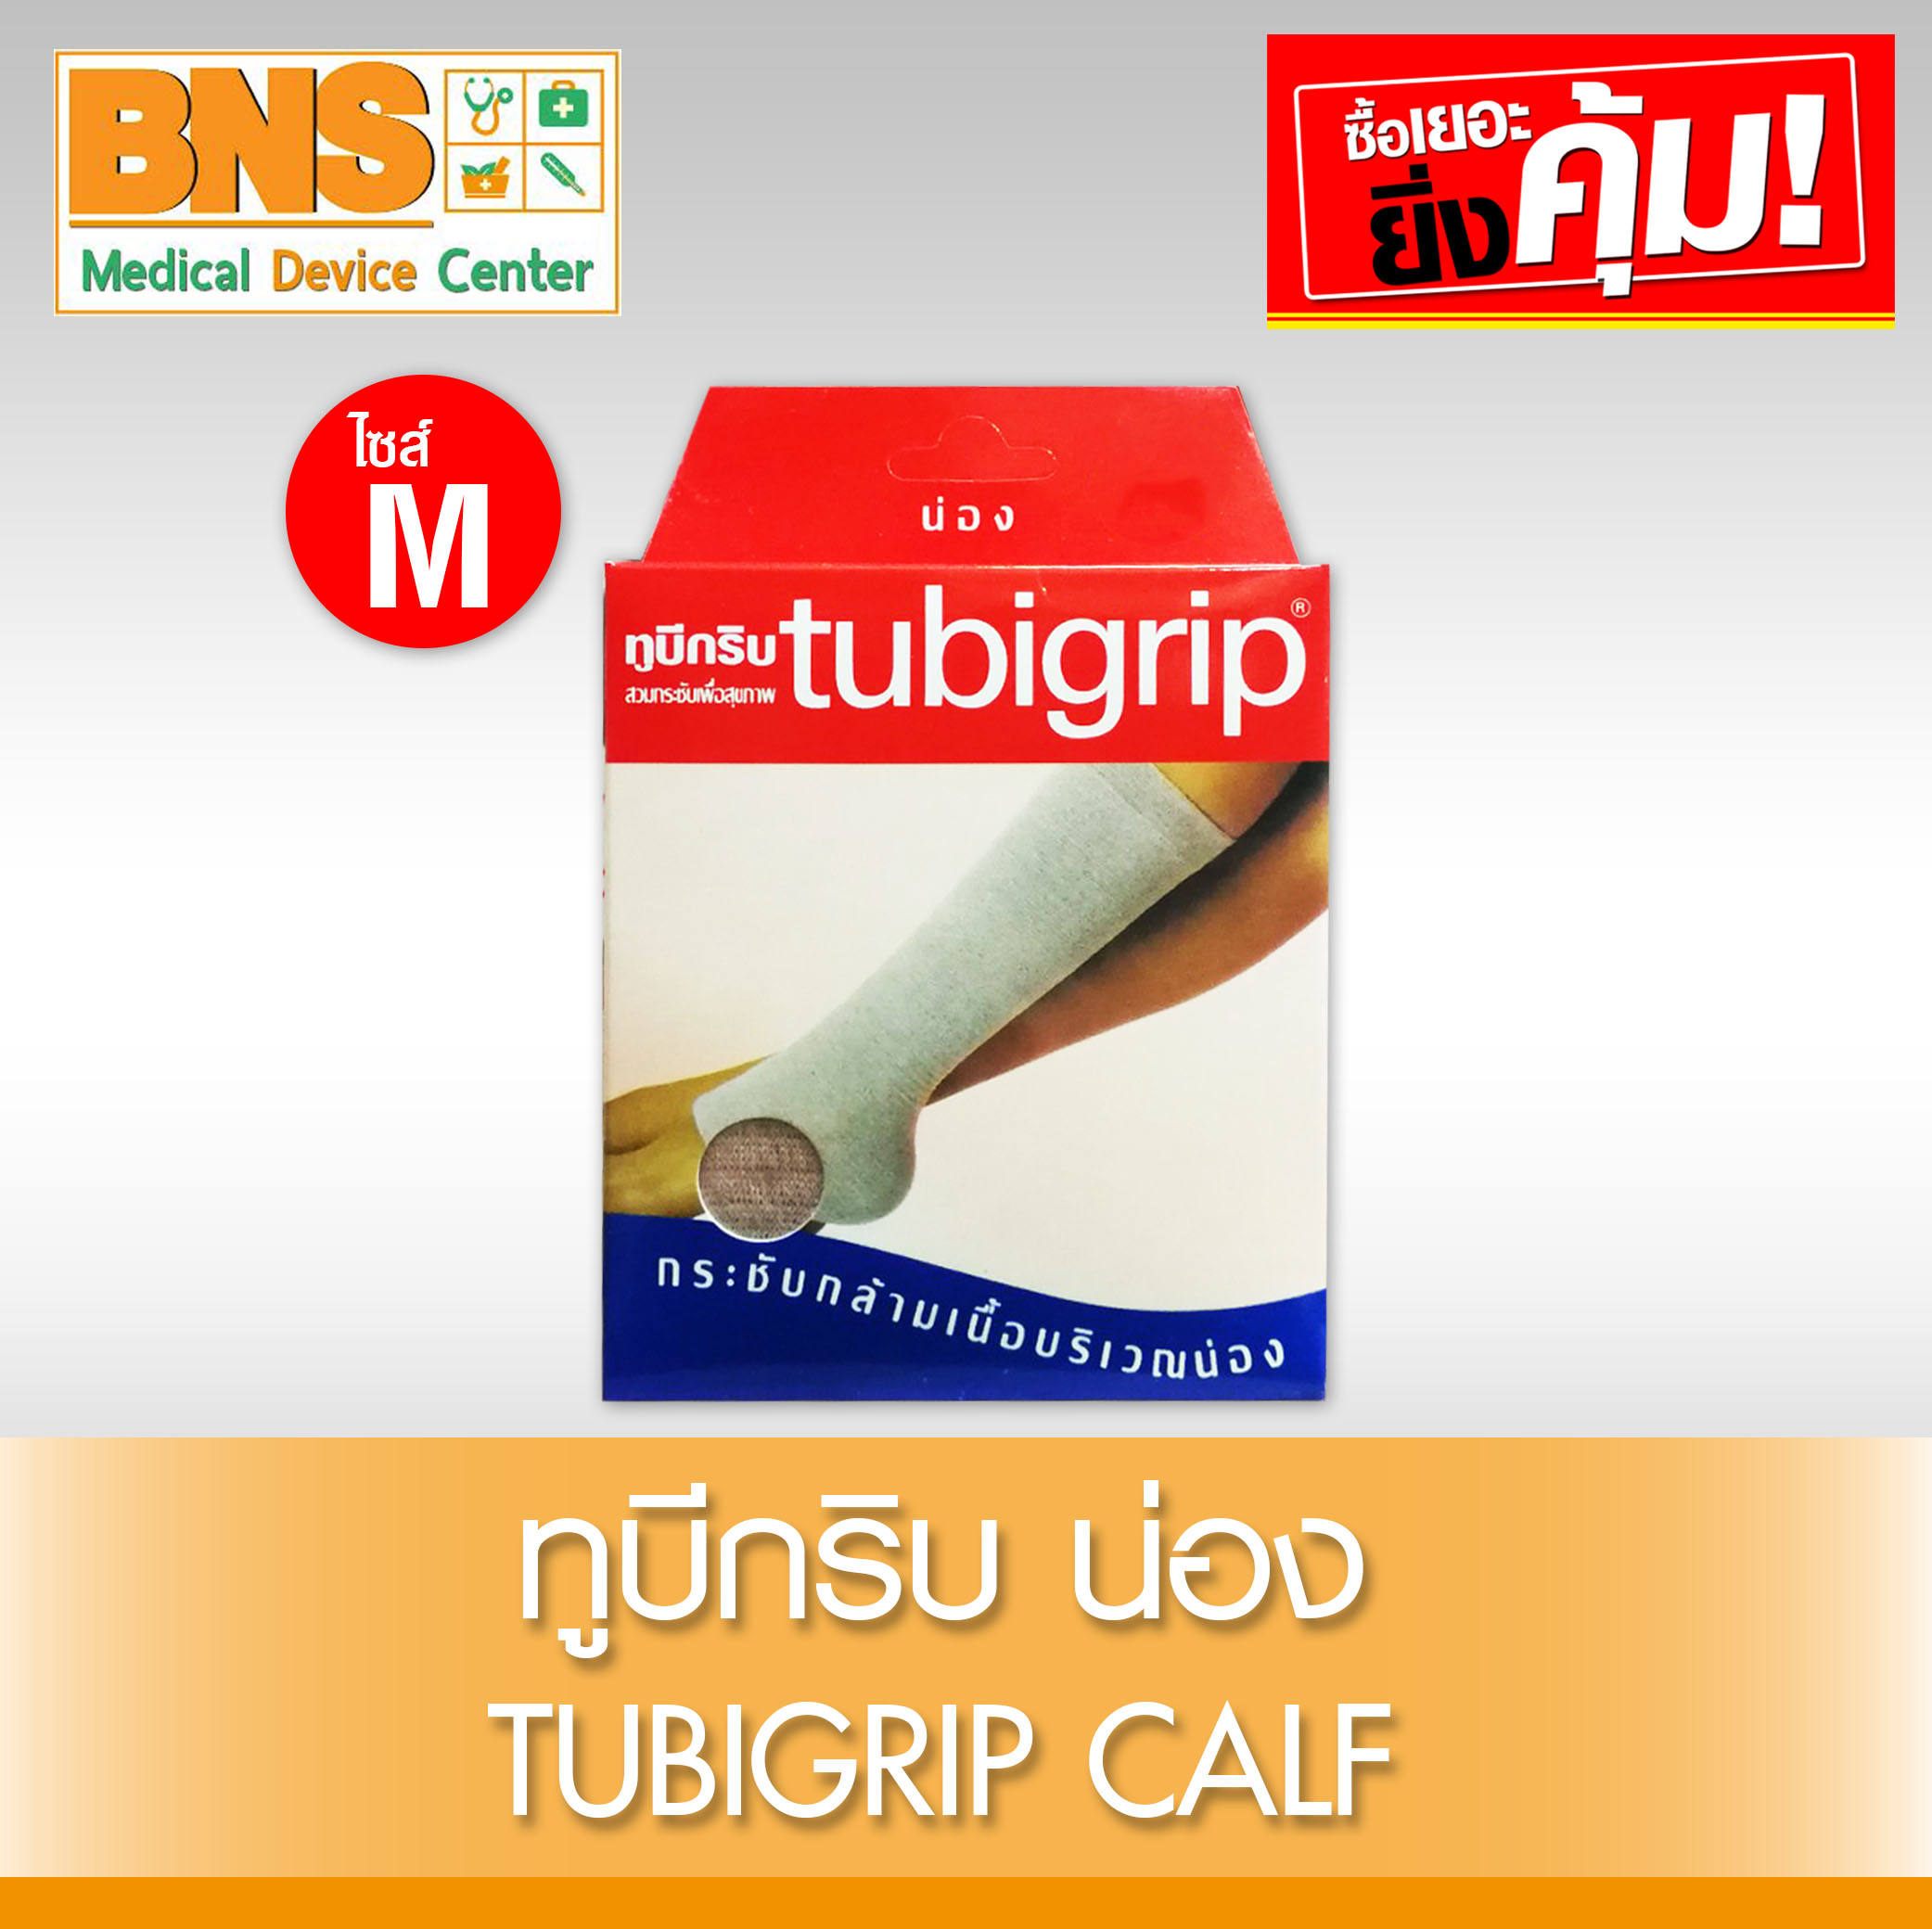 Tubigrip Calf ทูบีกริบ (น่อง) ไซร้ M (สินค้าใหม่) (ถูกที่สุด) By BNS